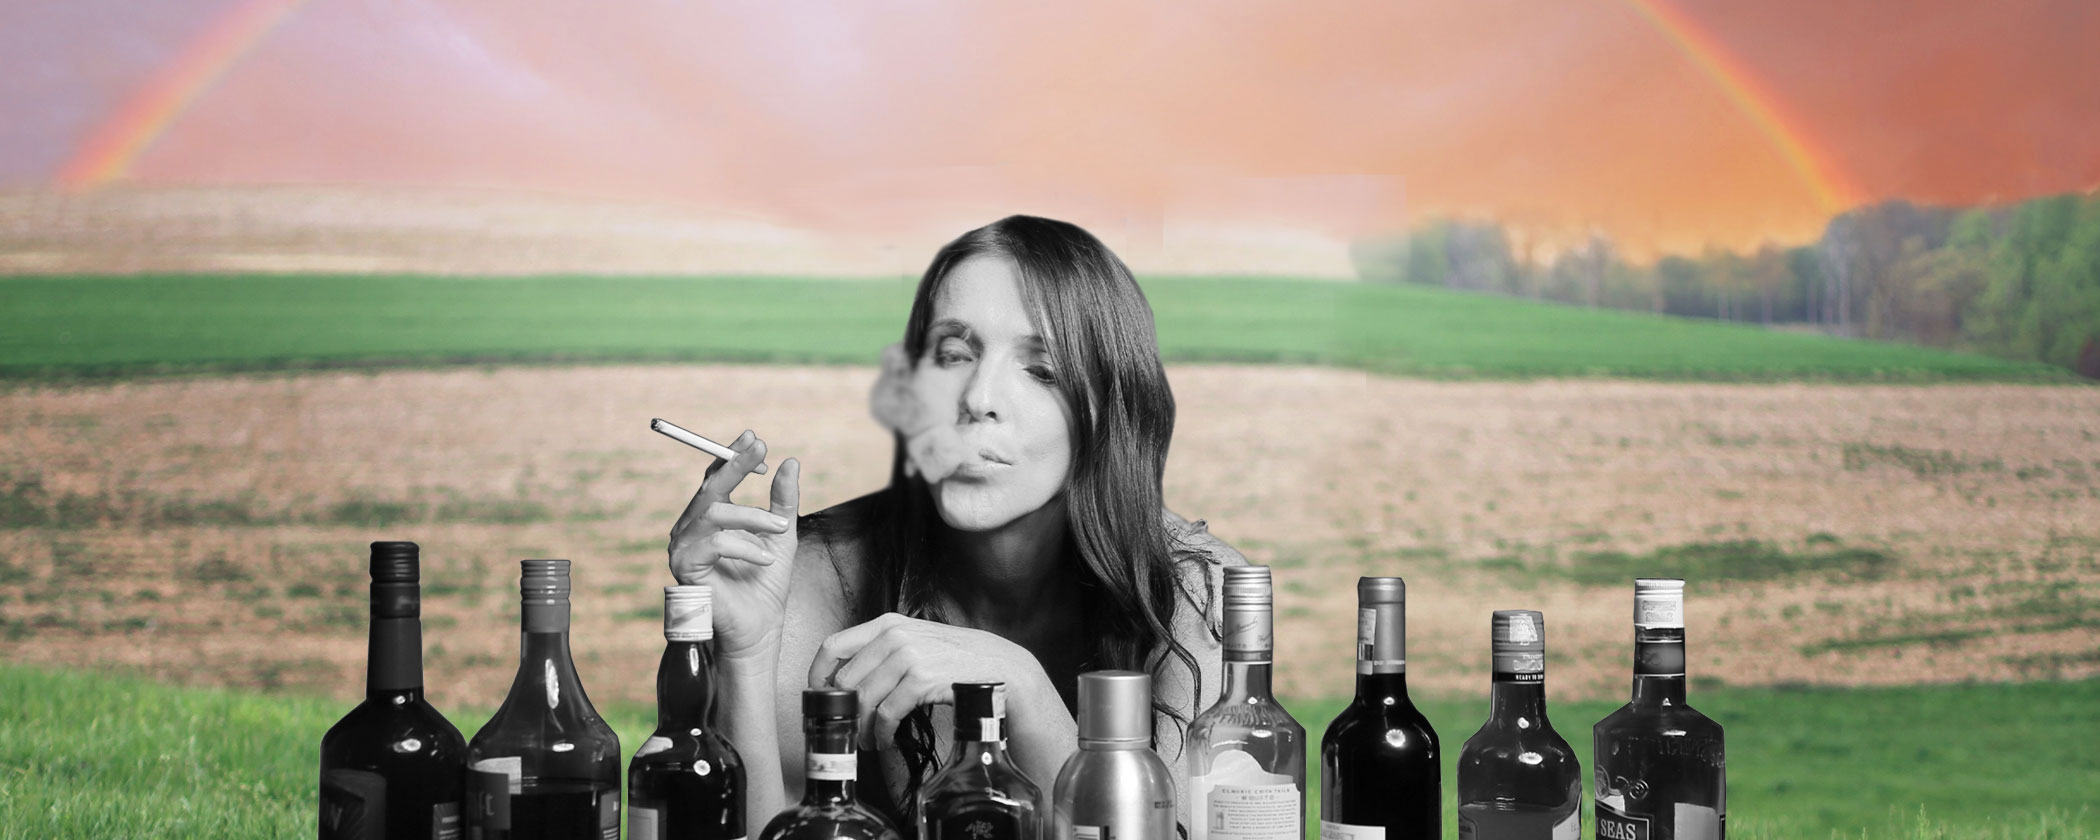 Heather Smoking and Alcohol Challenge